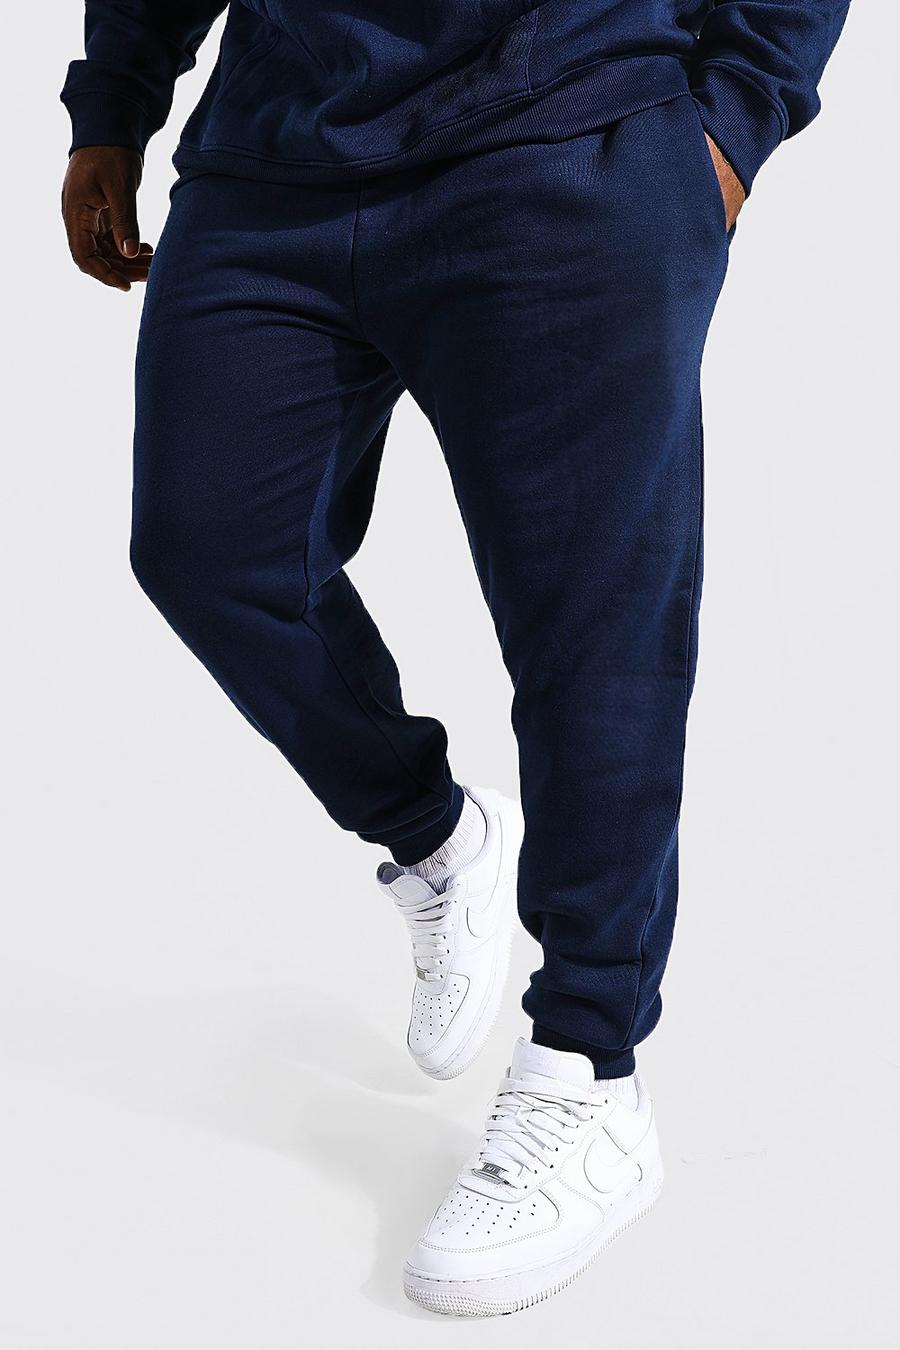 Pantalón deportivo Plus pitillo básico reciclado, Navy azul marino image number 1